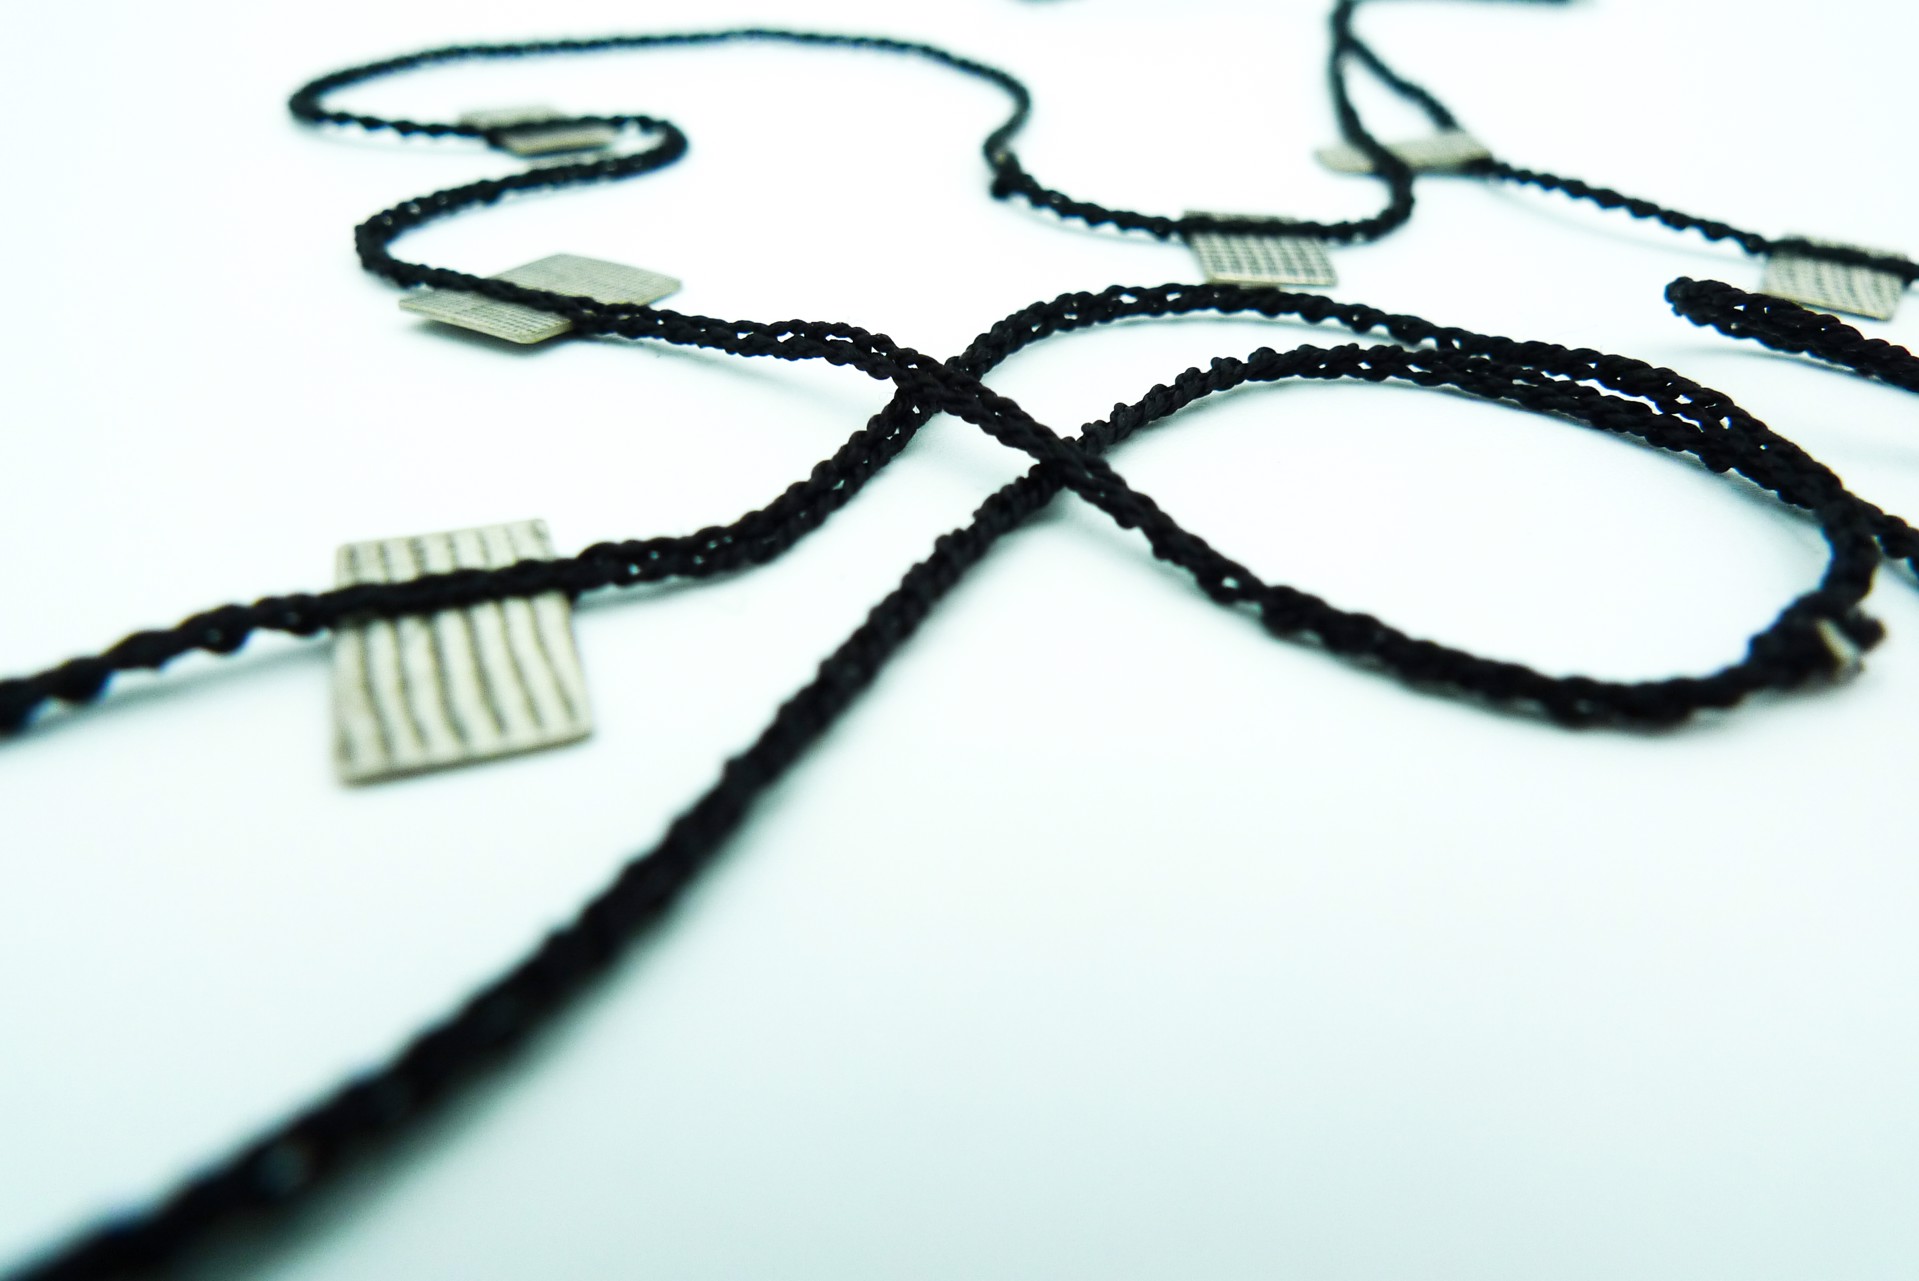 Necklace by Erica Schlueter